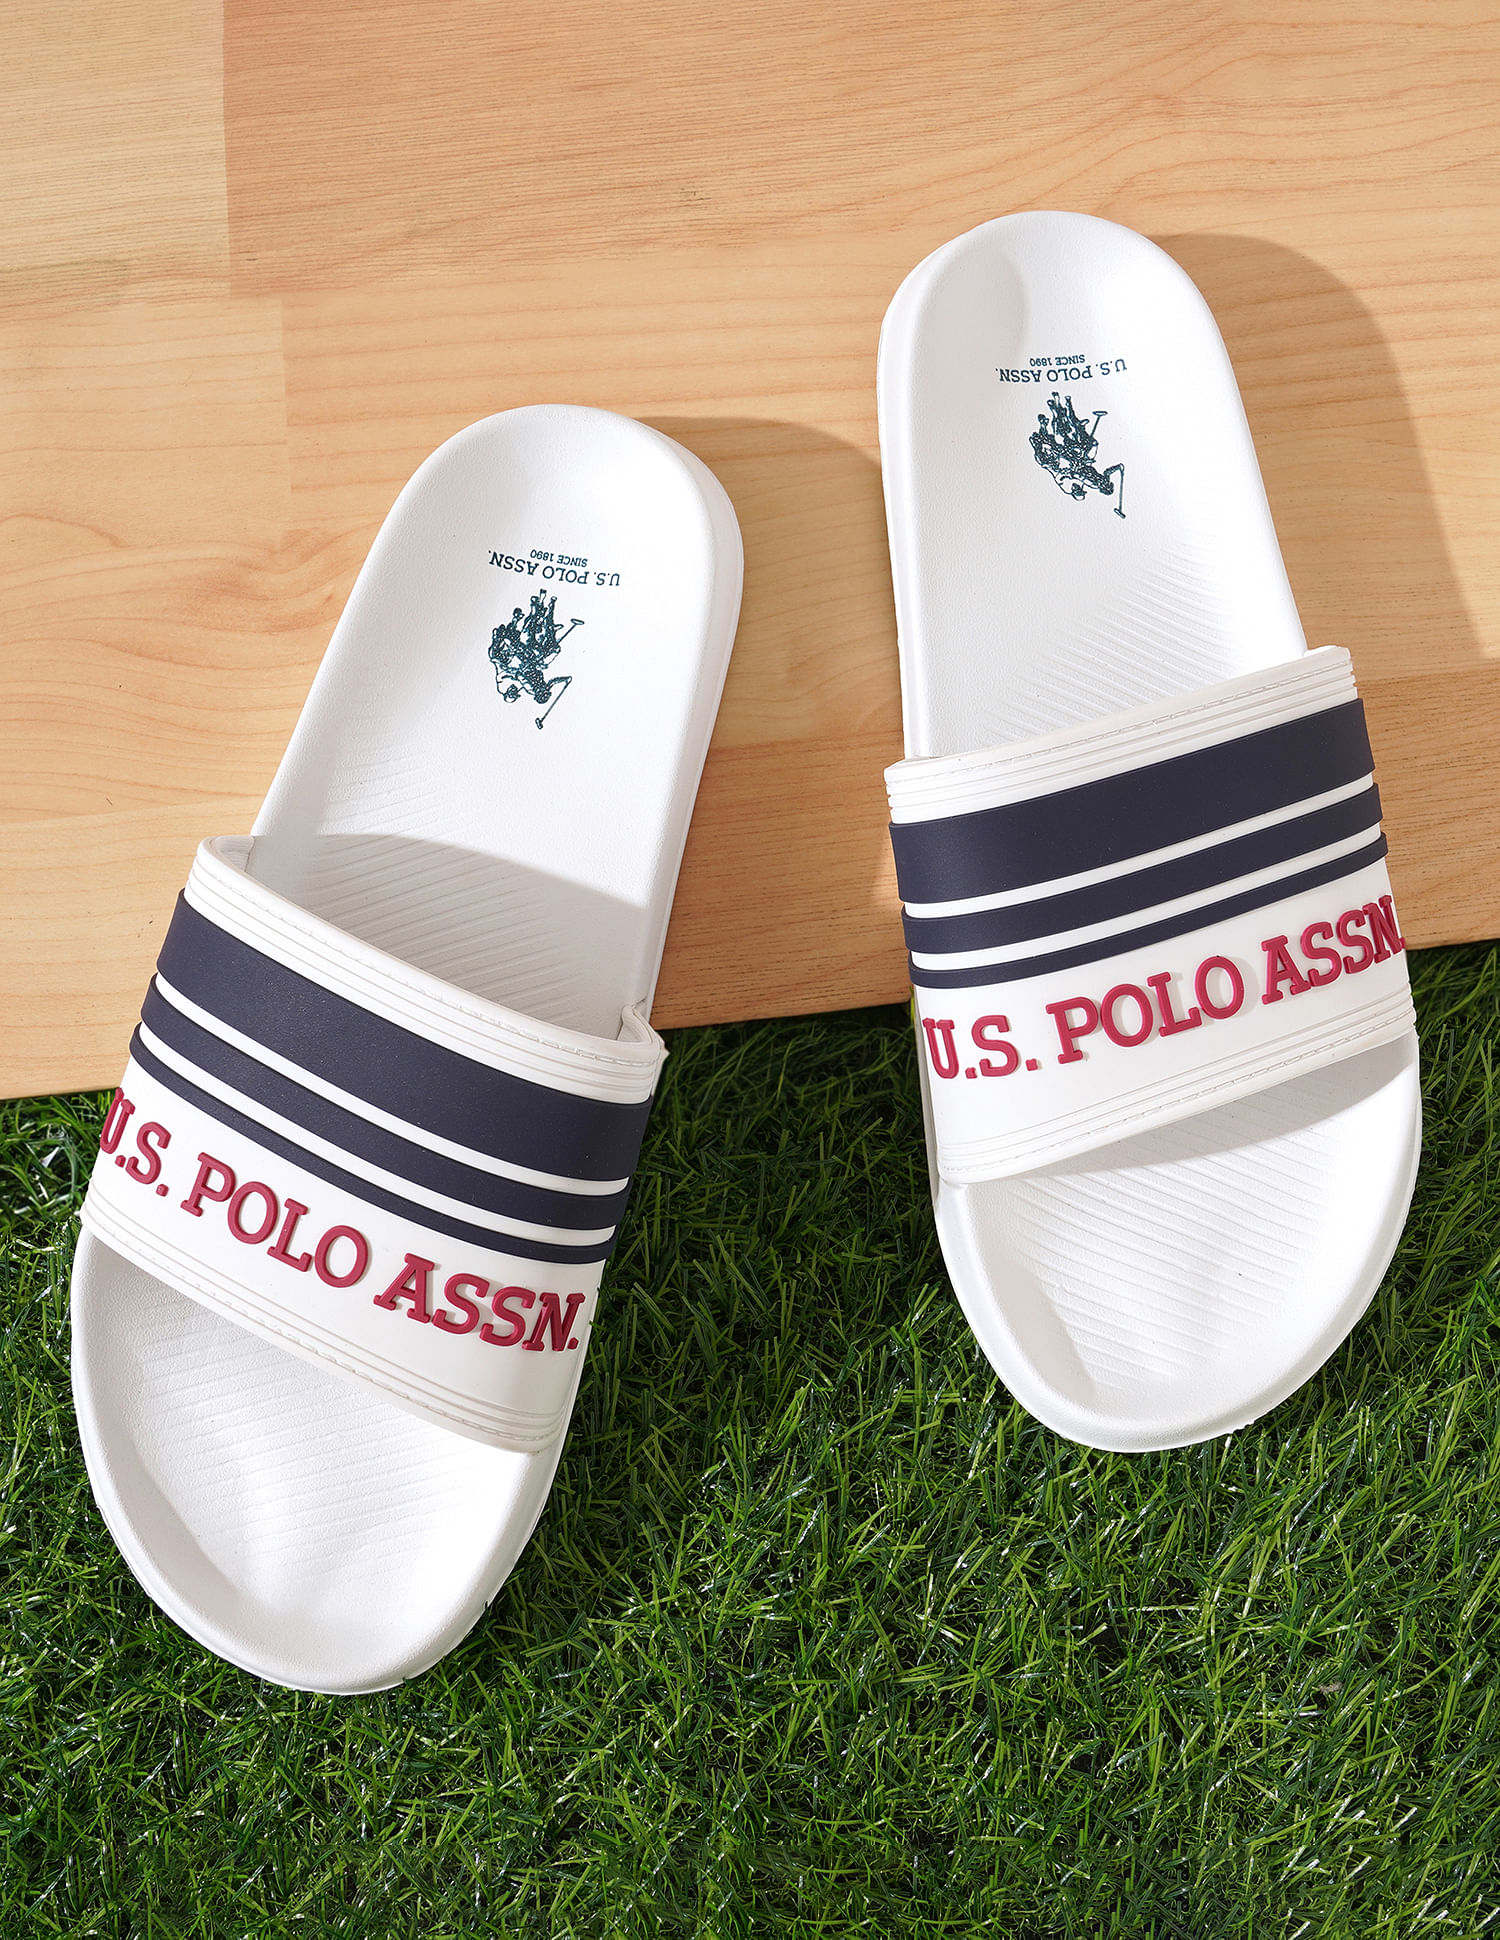 Buy U.S.Polo Assn. Men's Nacho Red Flip Flops Thong Sandals - 7 UK/India  (41 EU)(2531902043) at Amazon.in